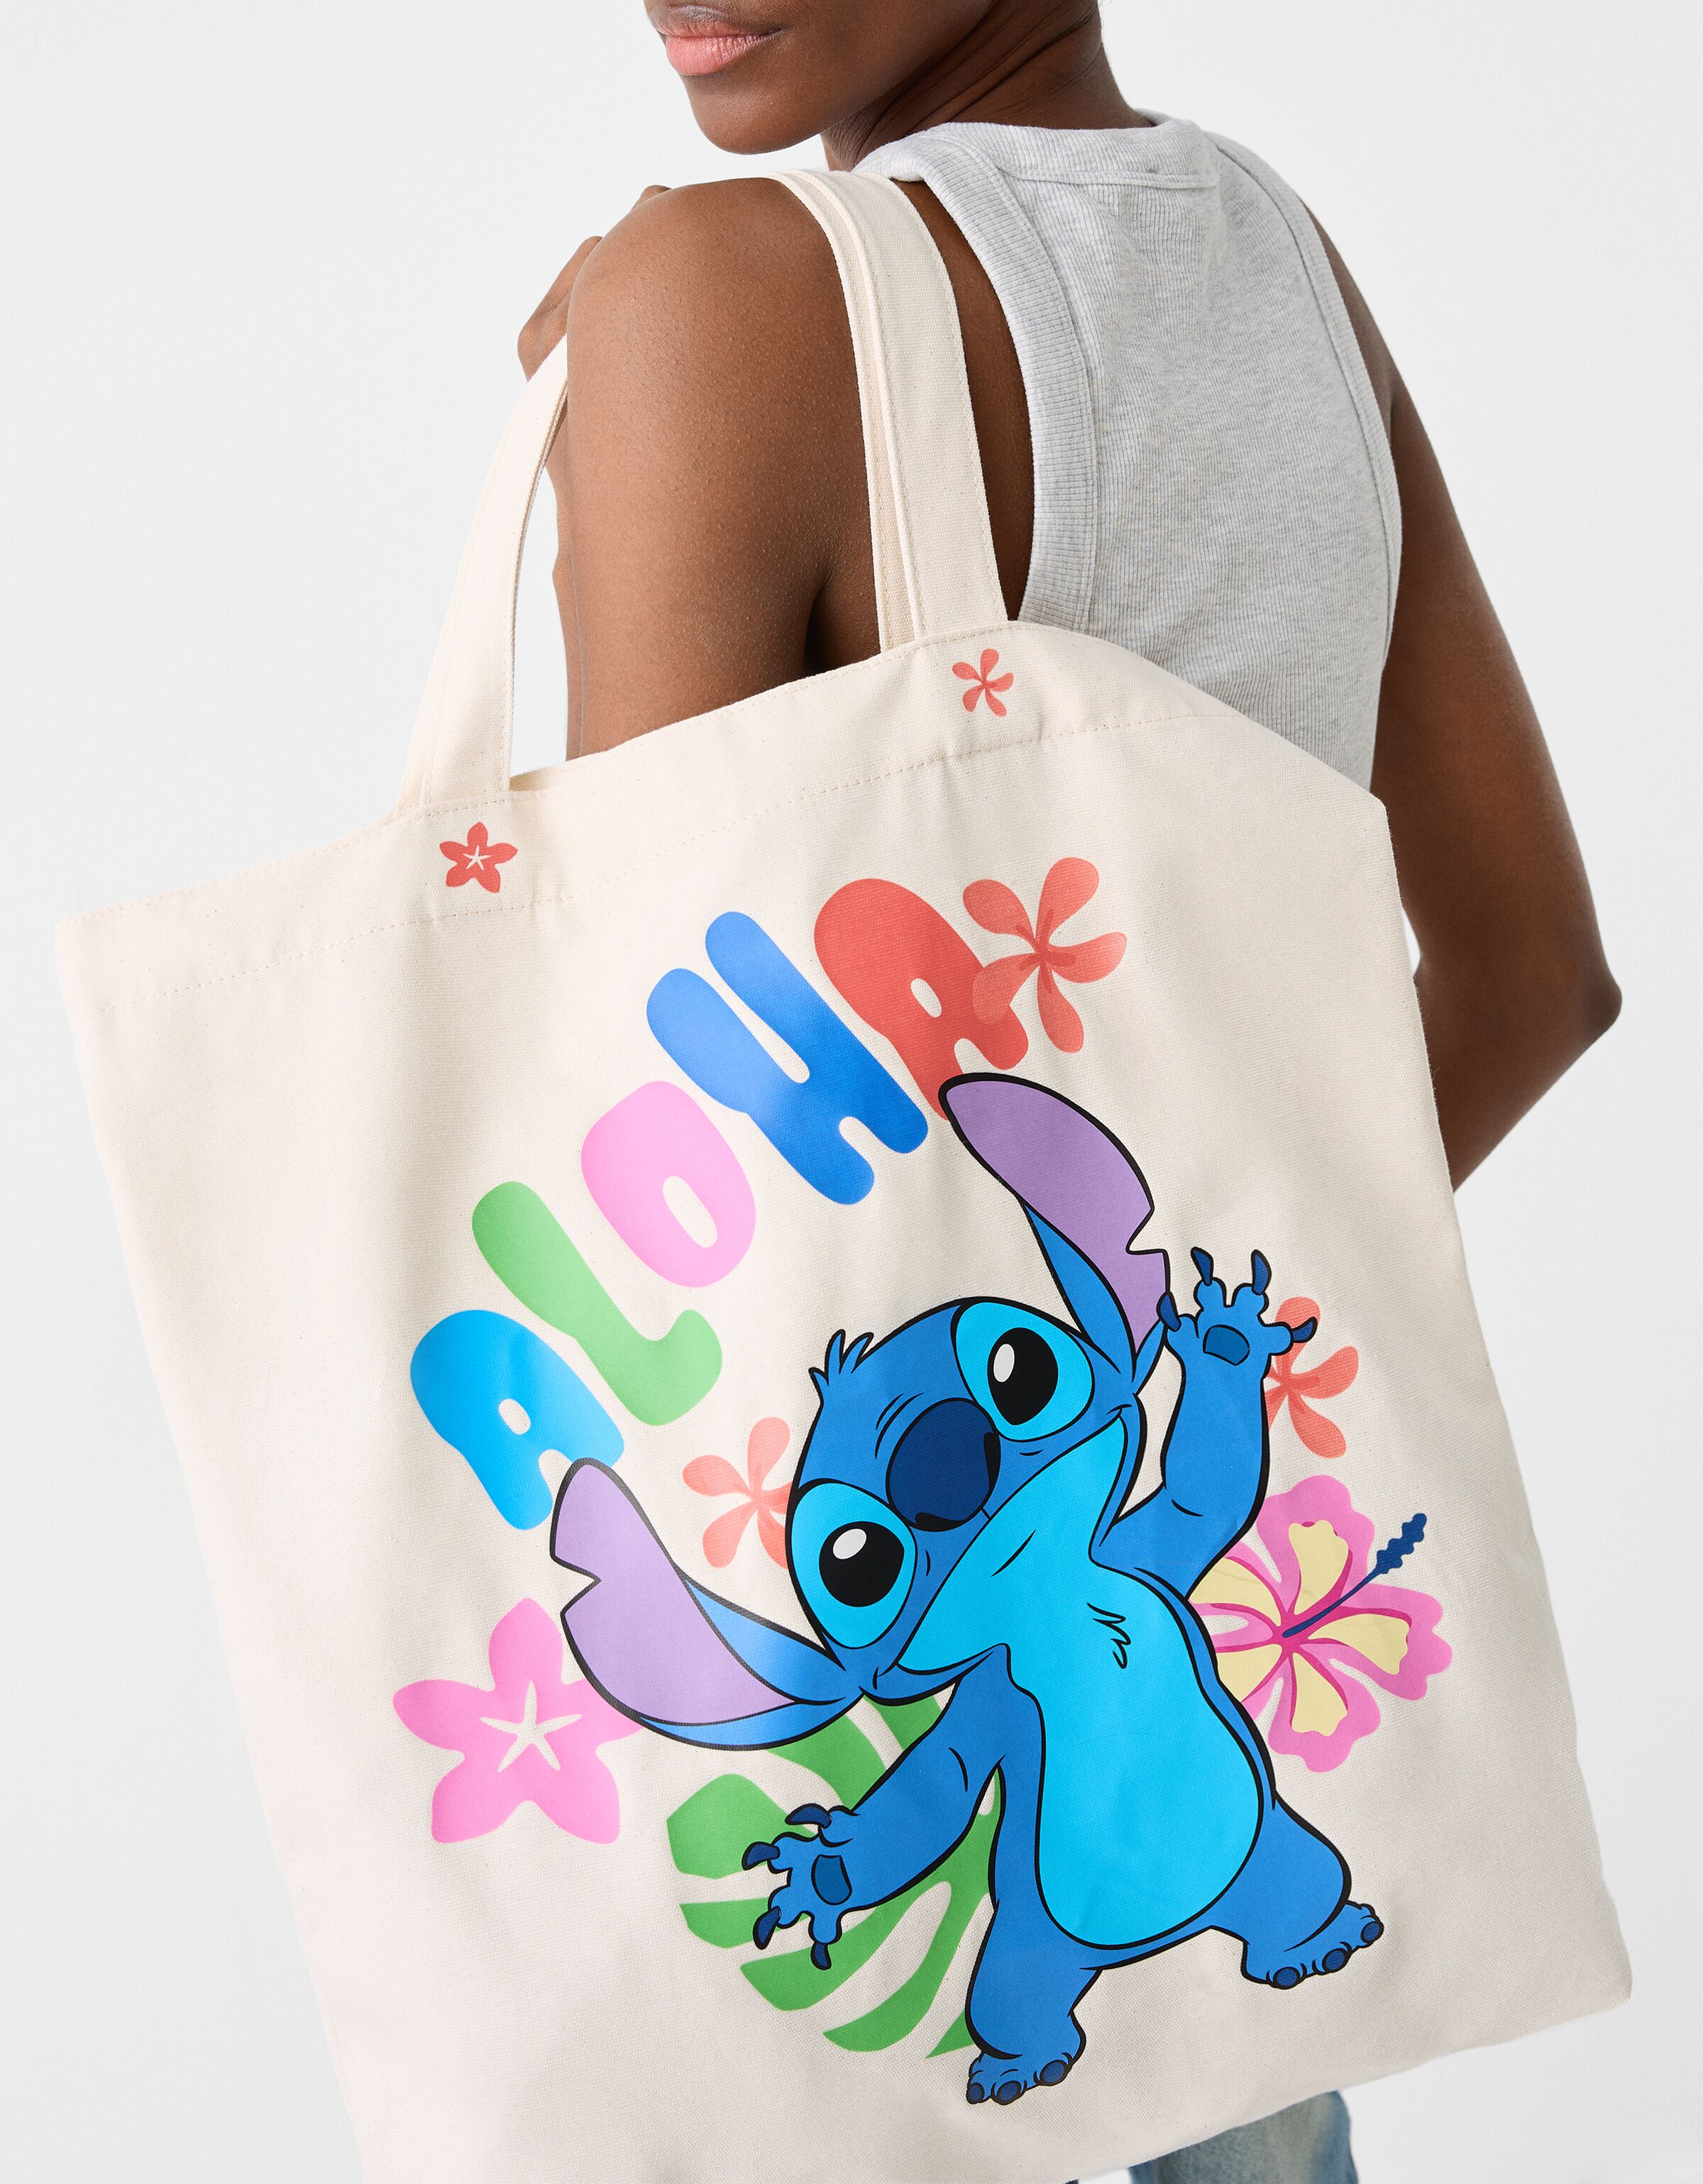 Amazon.com: Lilo and Stitch 16 Inch Allover Print Laptop Backpack (Aqua) :  Electronics